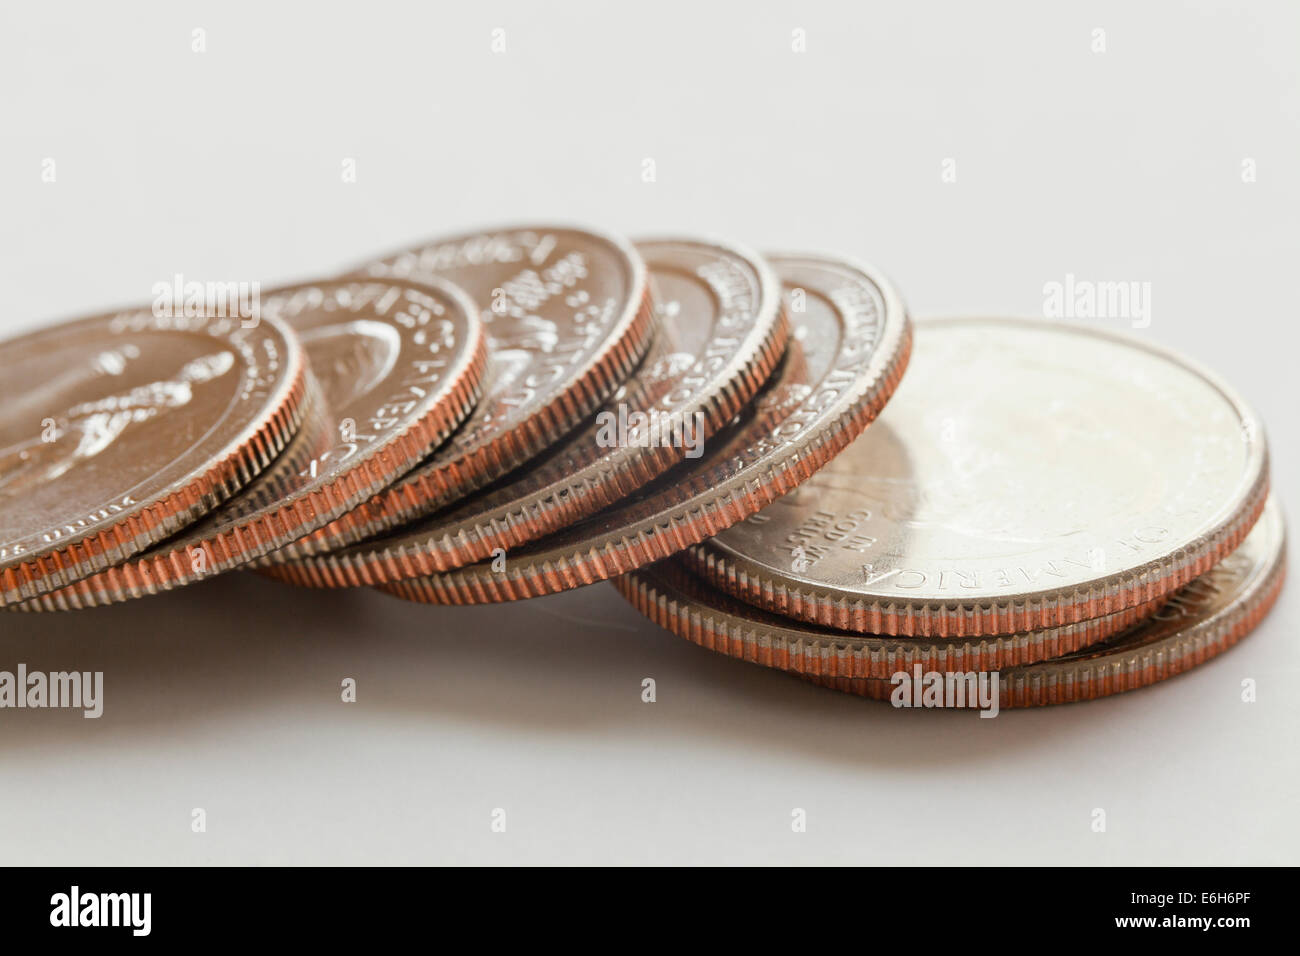 Fallen stack of US quarter dollar coins Stock Photo